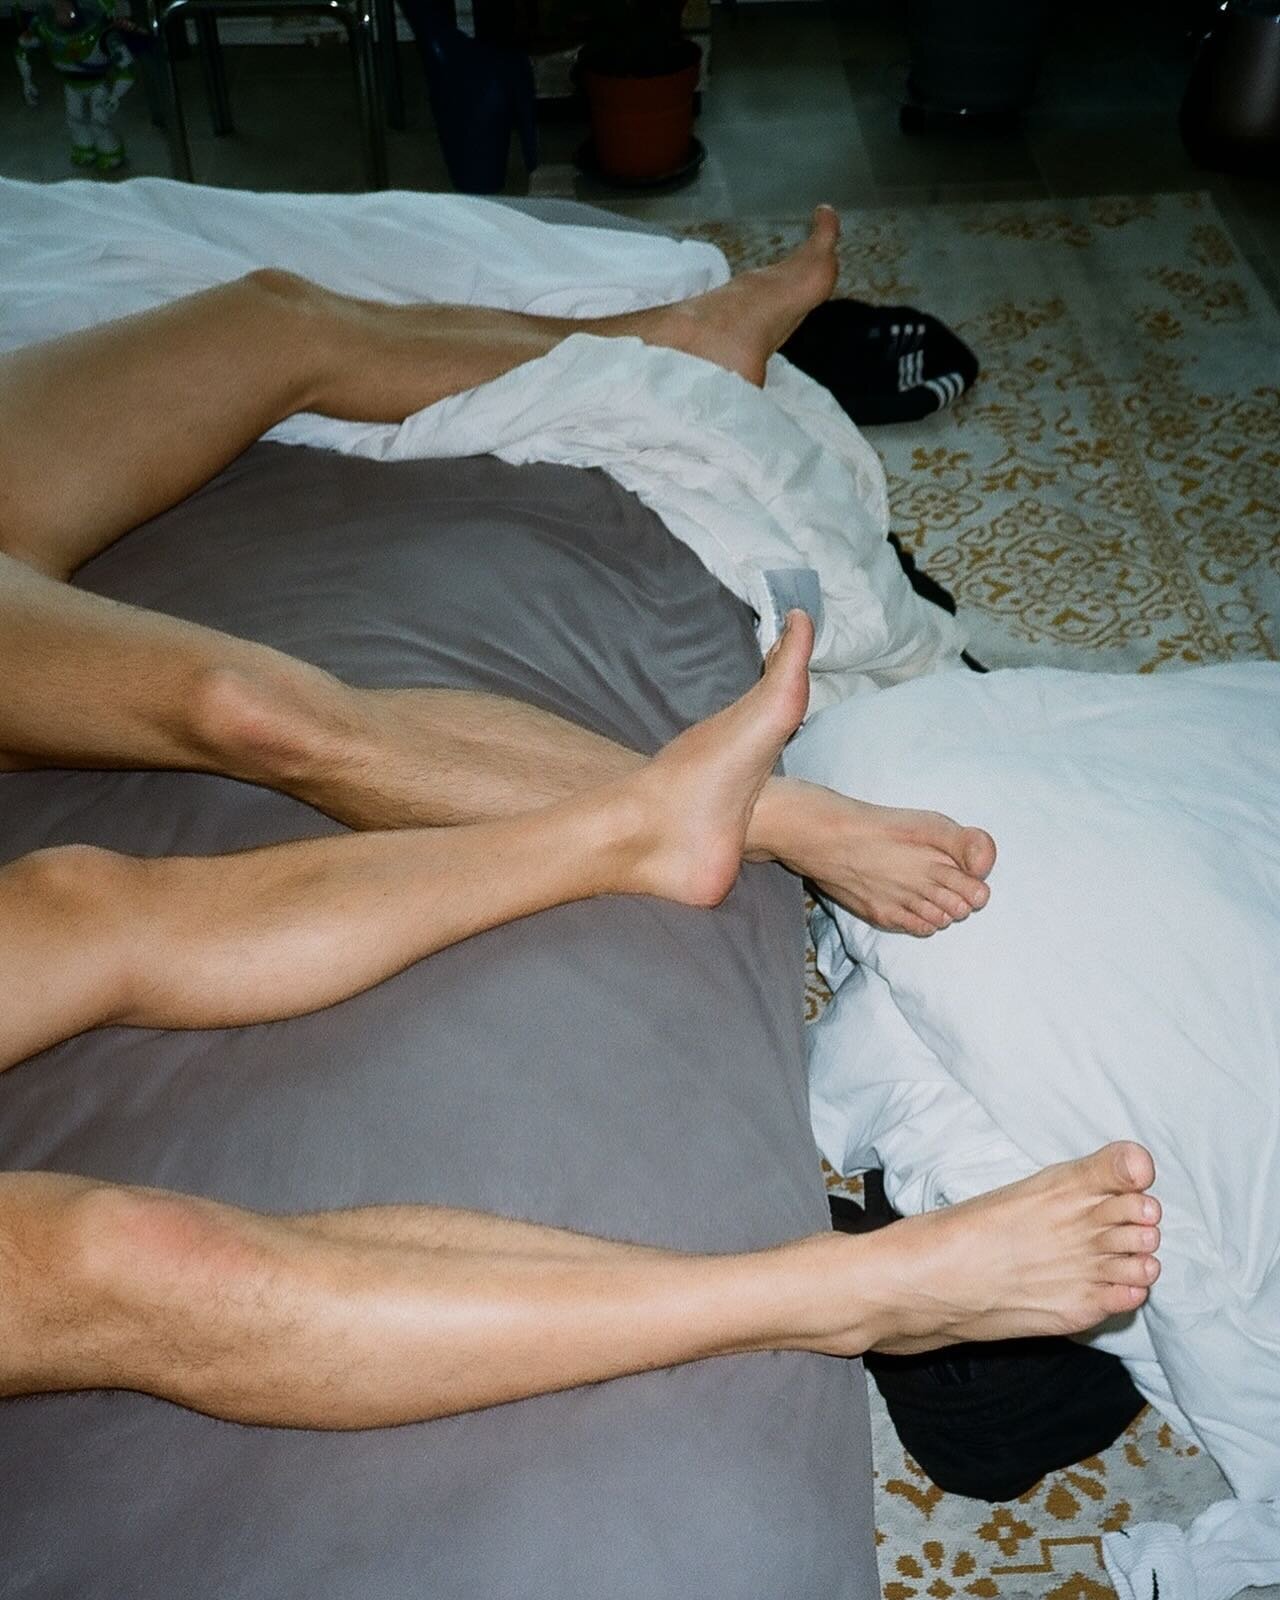 Boys in bed 

#godsandboys #boysofberlin #onfilm